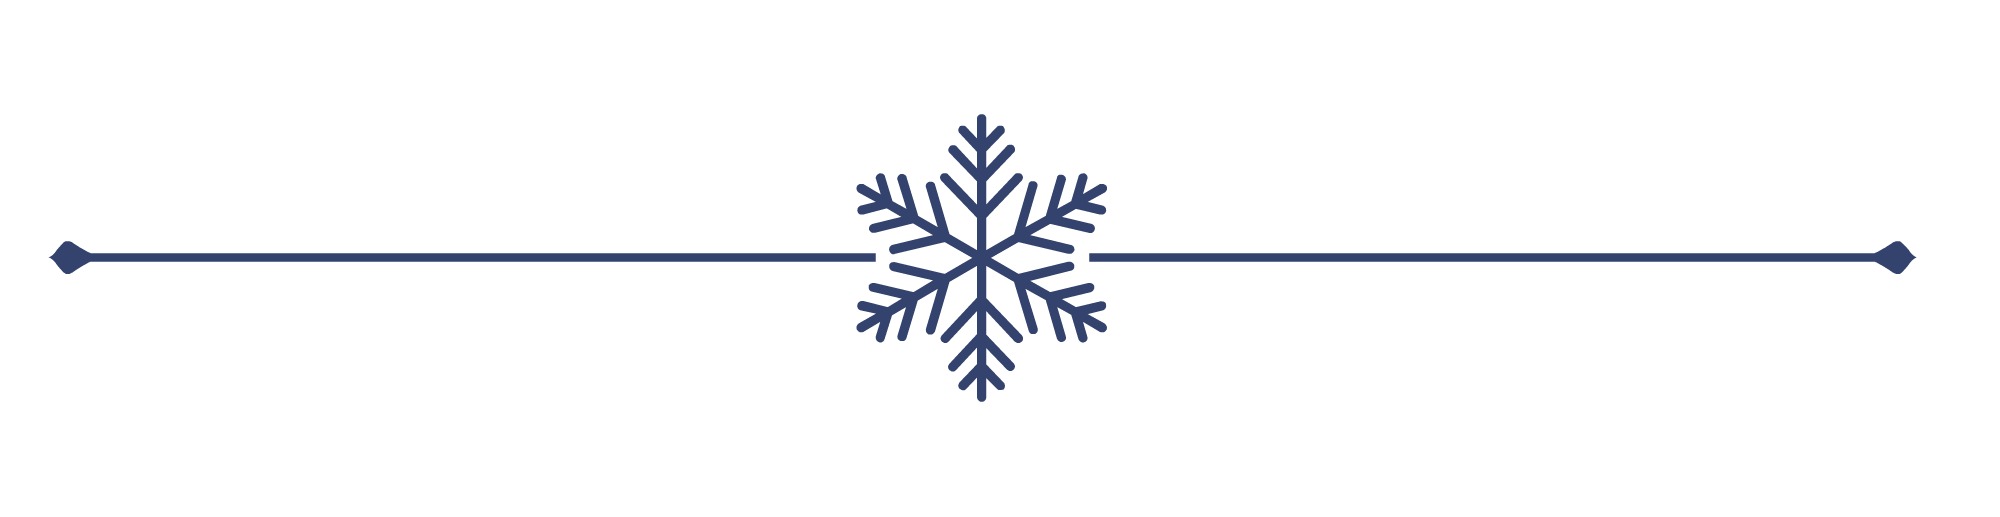 Snowflake-Divider.jpg